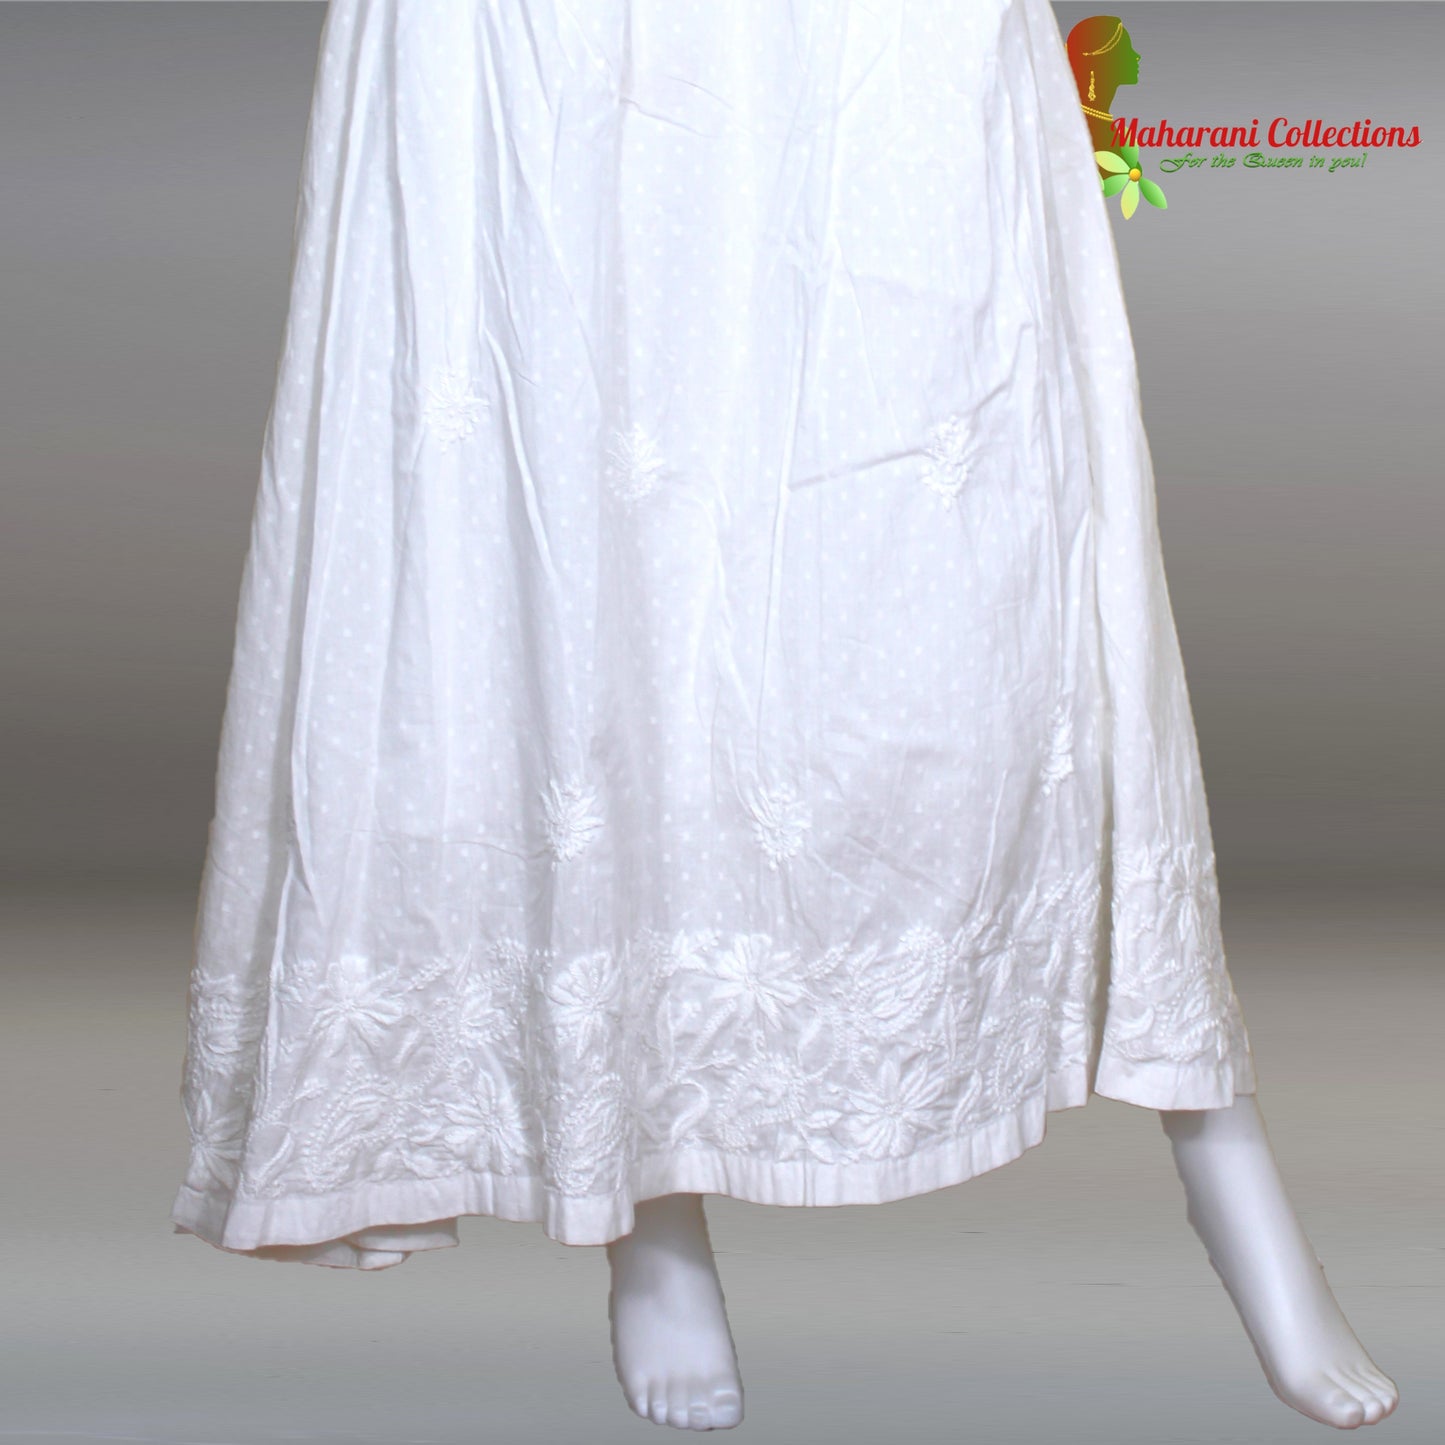 Maharani's Lucknowi Chikankari Long Skirt - White (M) - Pure Cotton